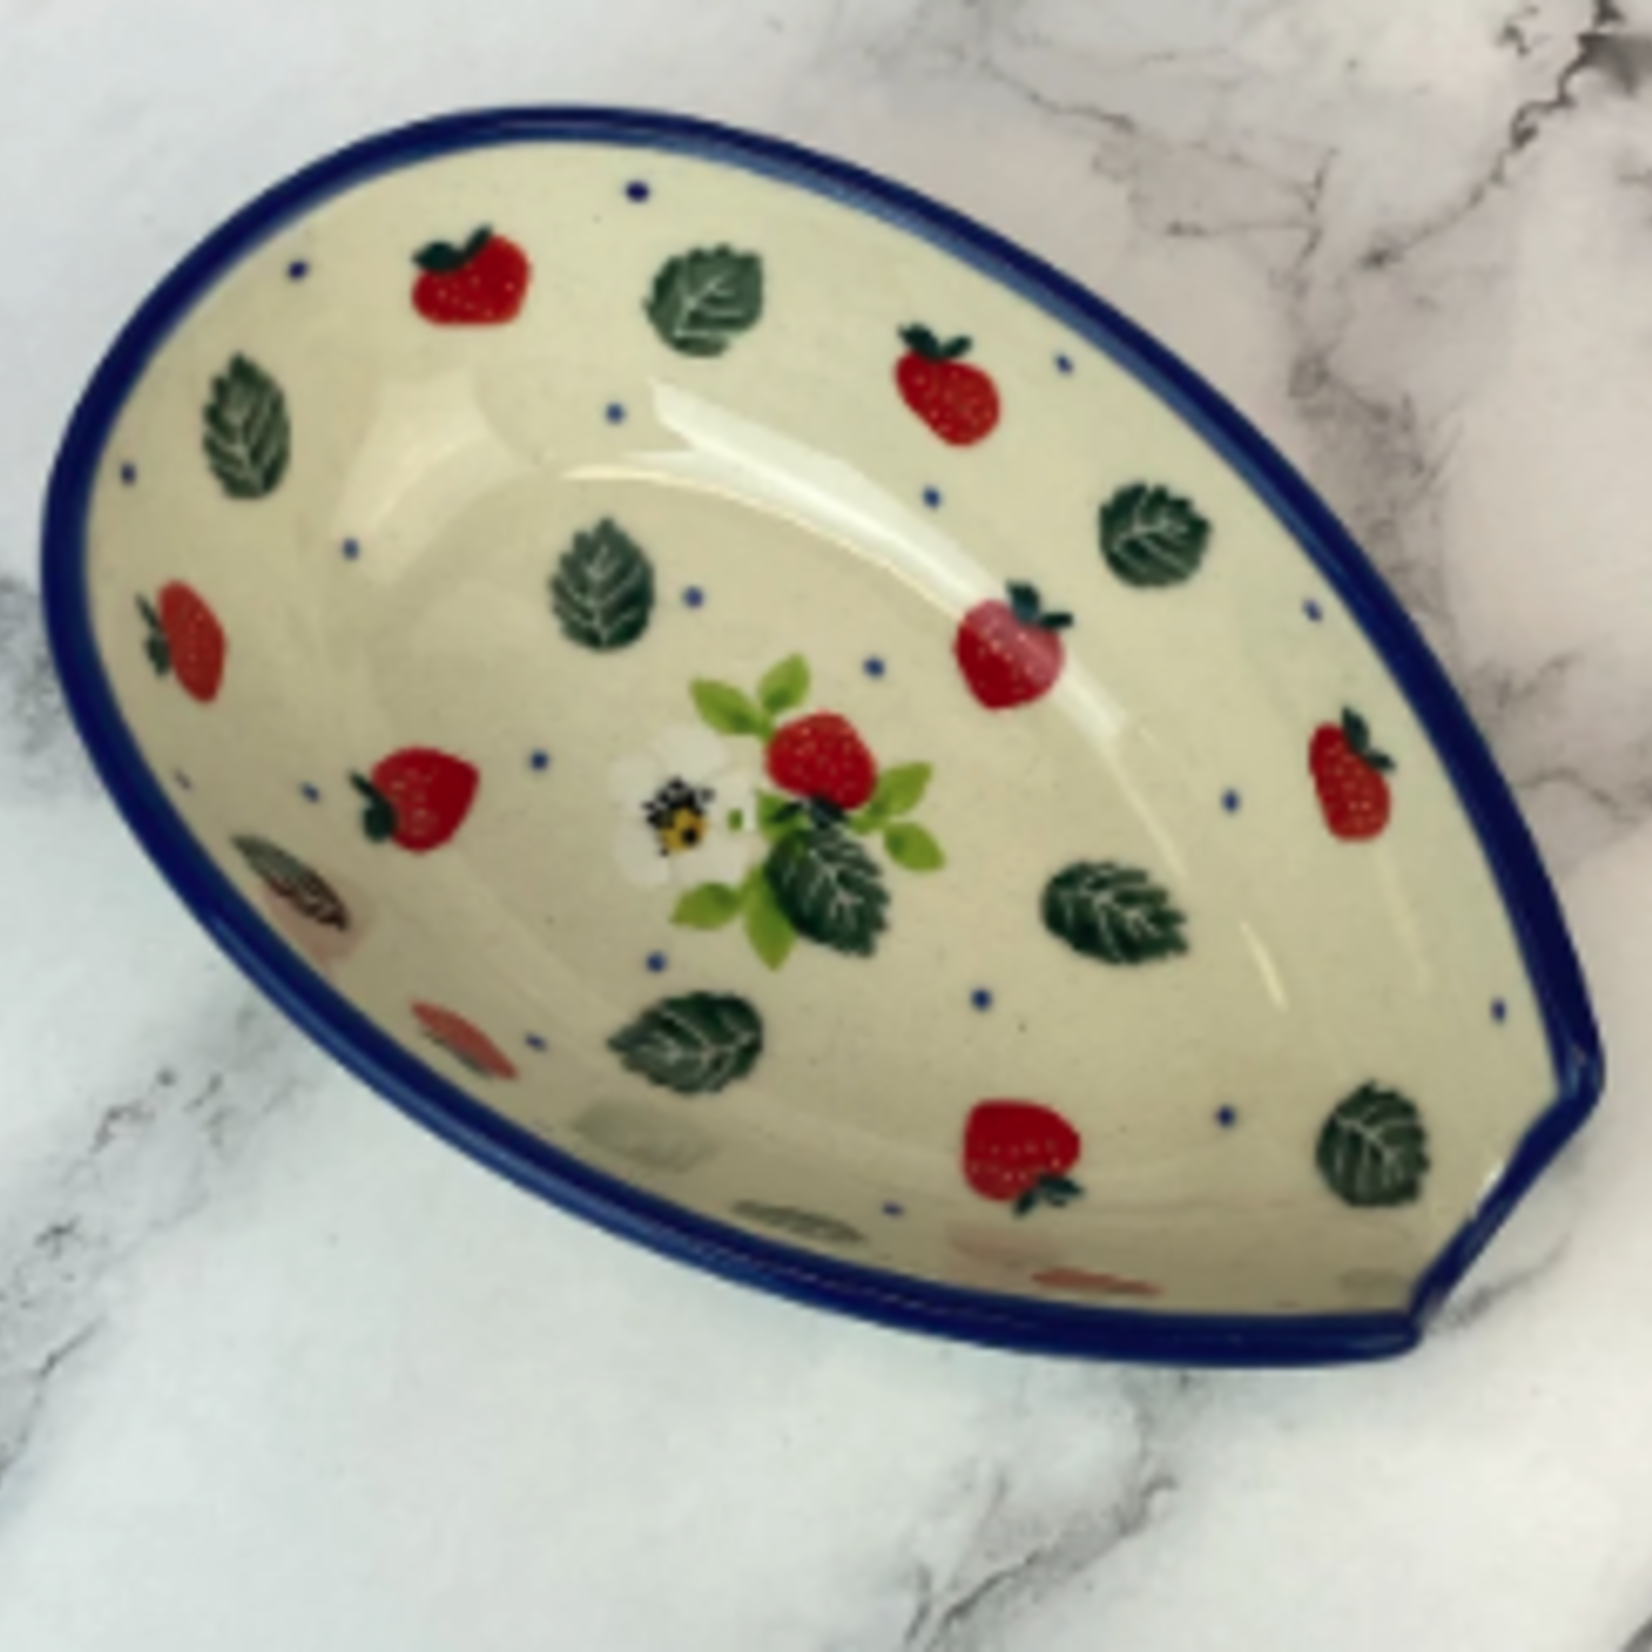 European Design Imports Inc. Polish Pottery Spoon Rest - Short, Strawberry